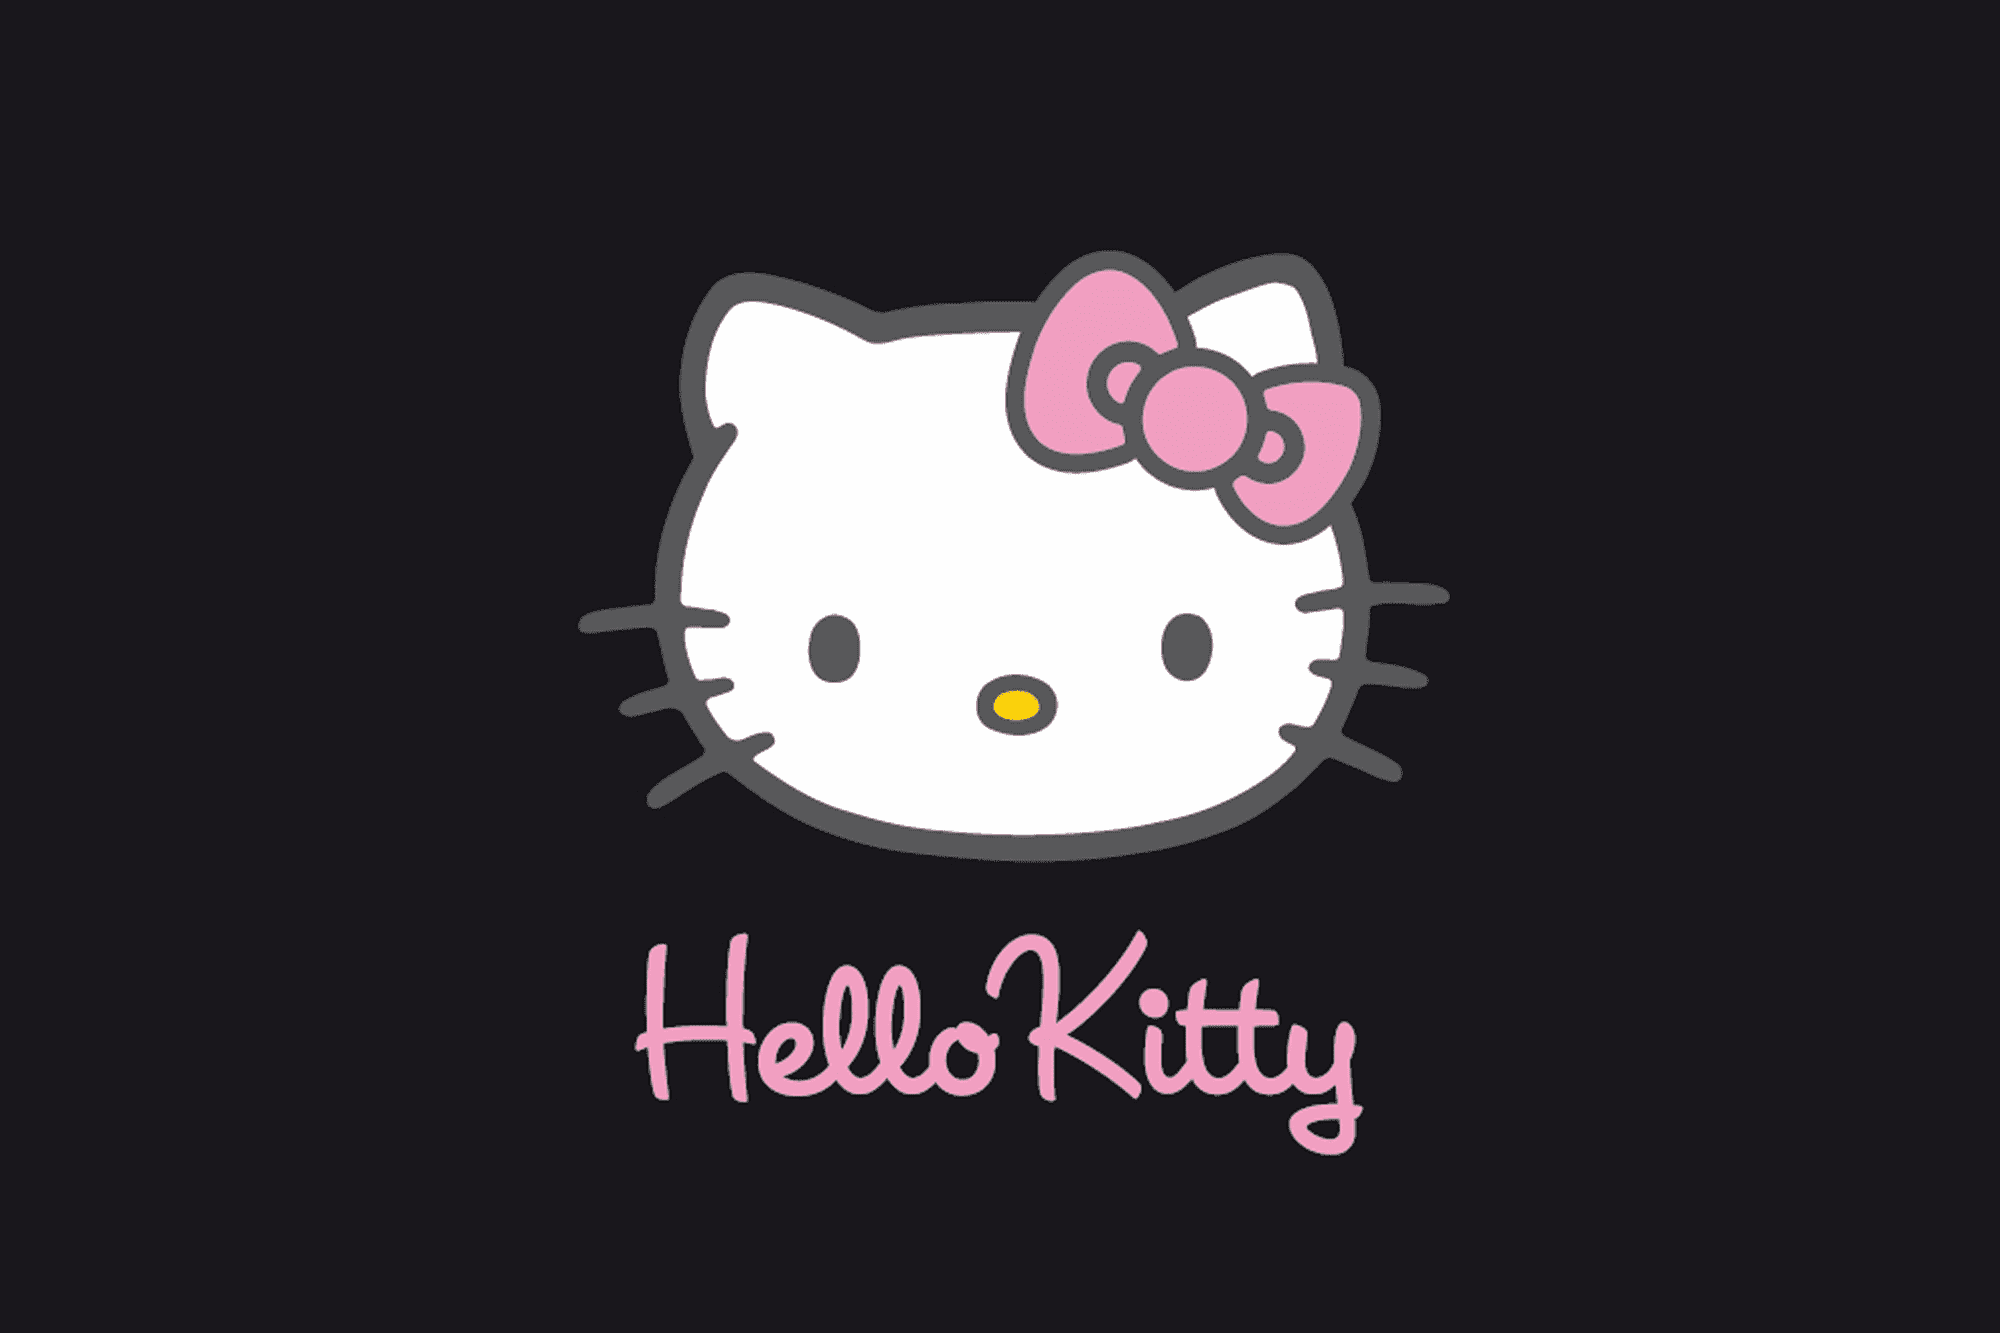 hallo kitty wallpaper kostenlos,text,rosa,weiß,karikatur,schriftart